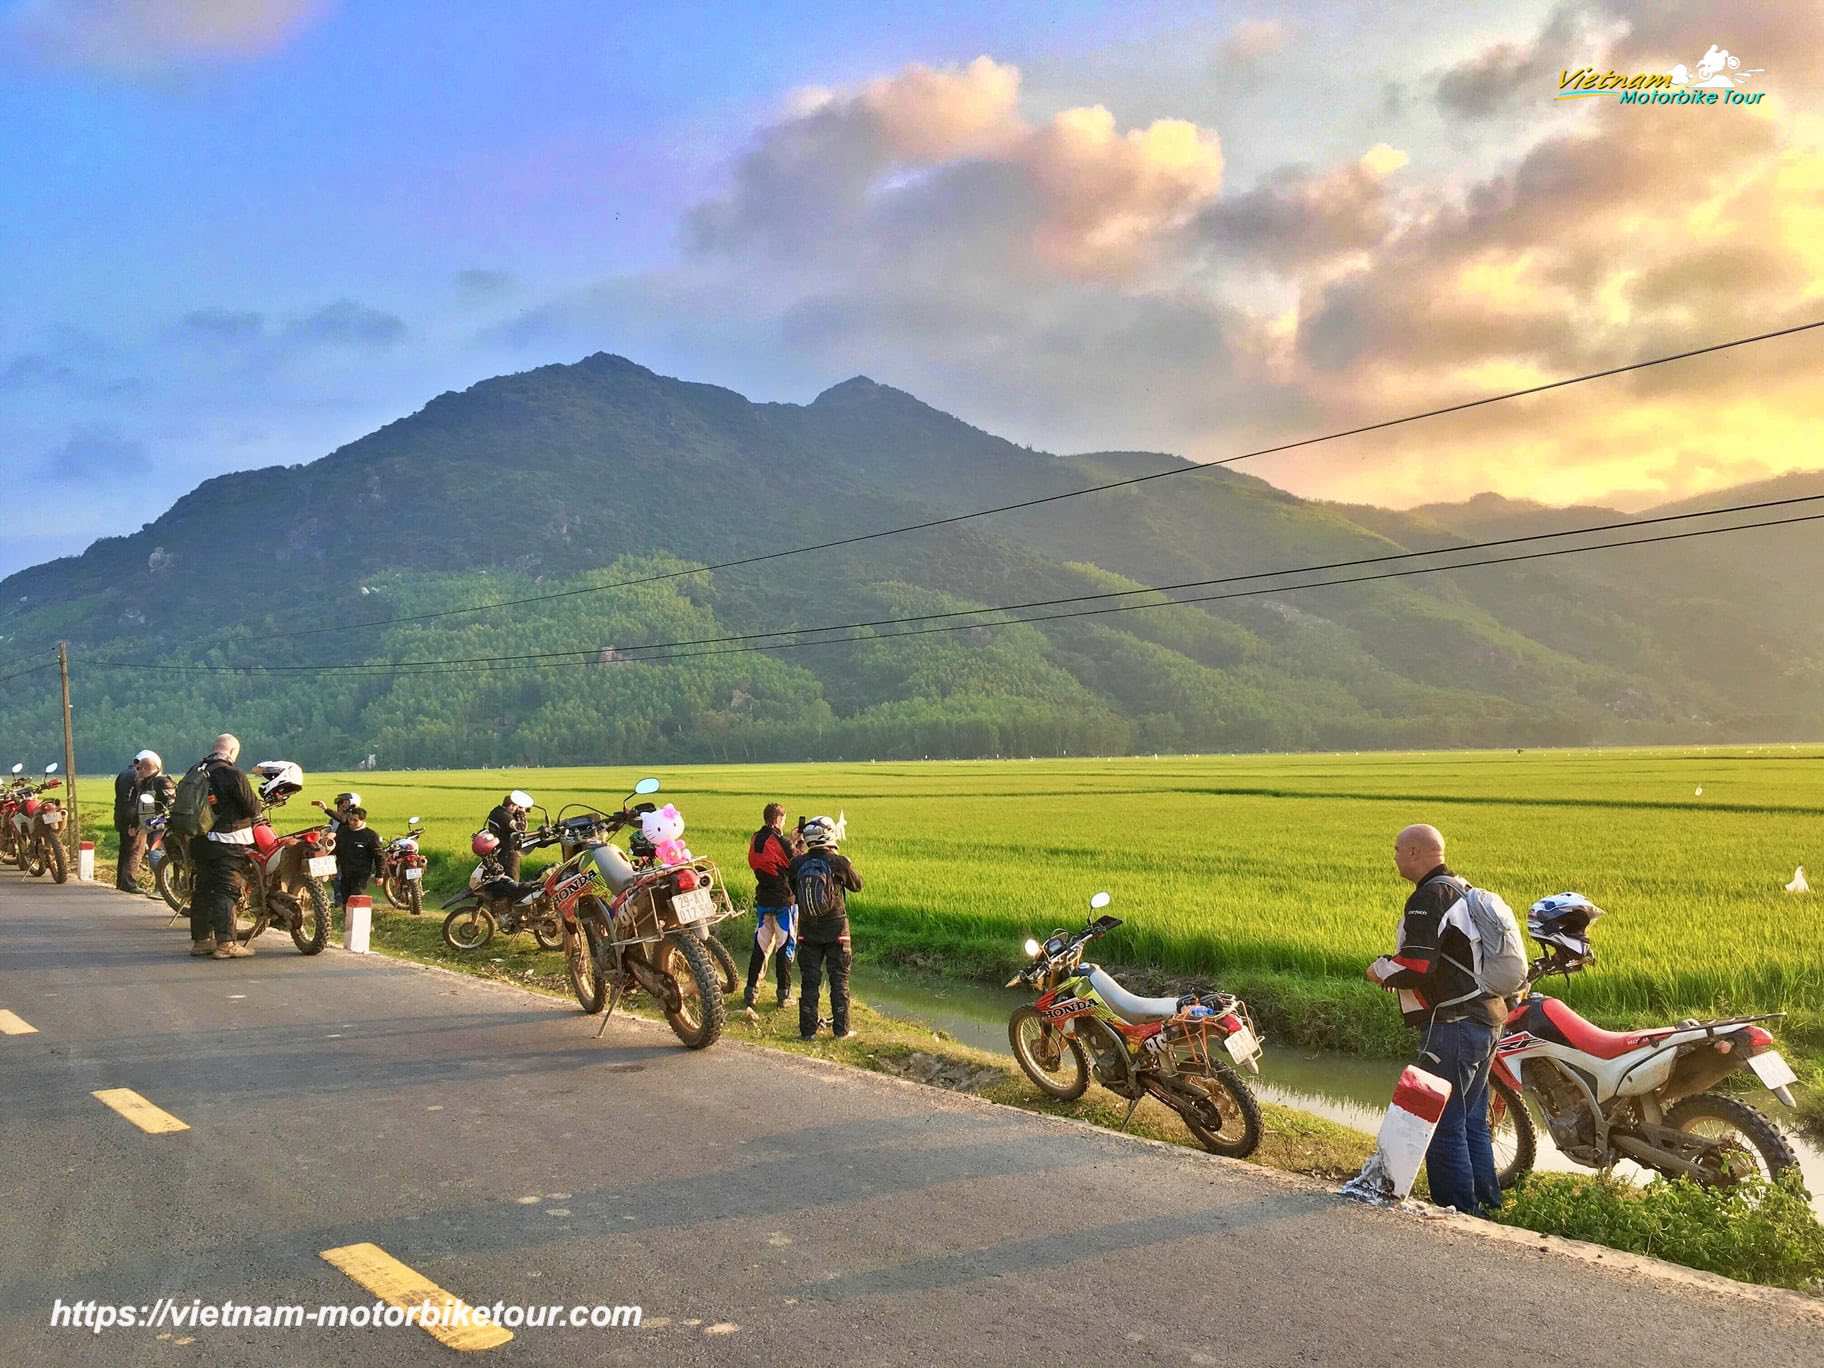 Motorcycle Tours back to Hanoi